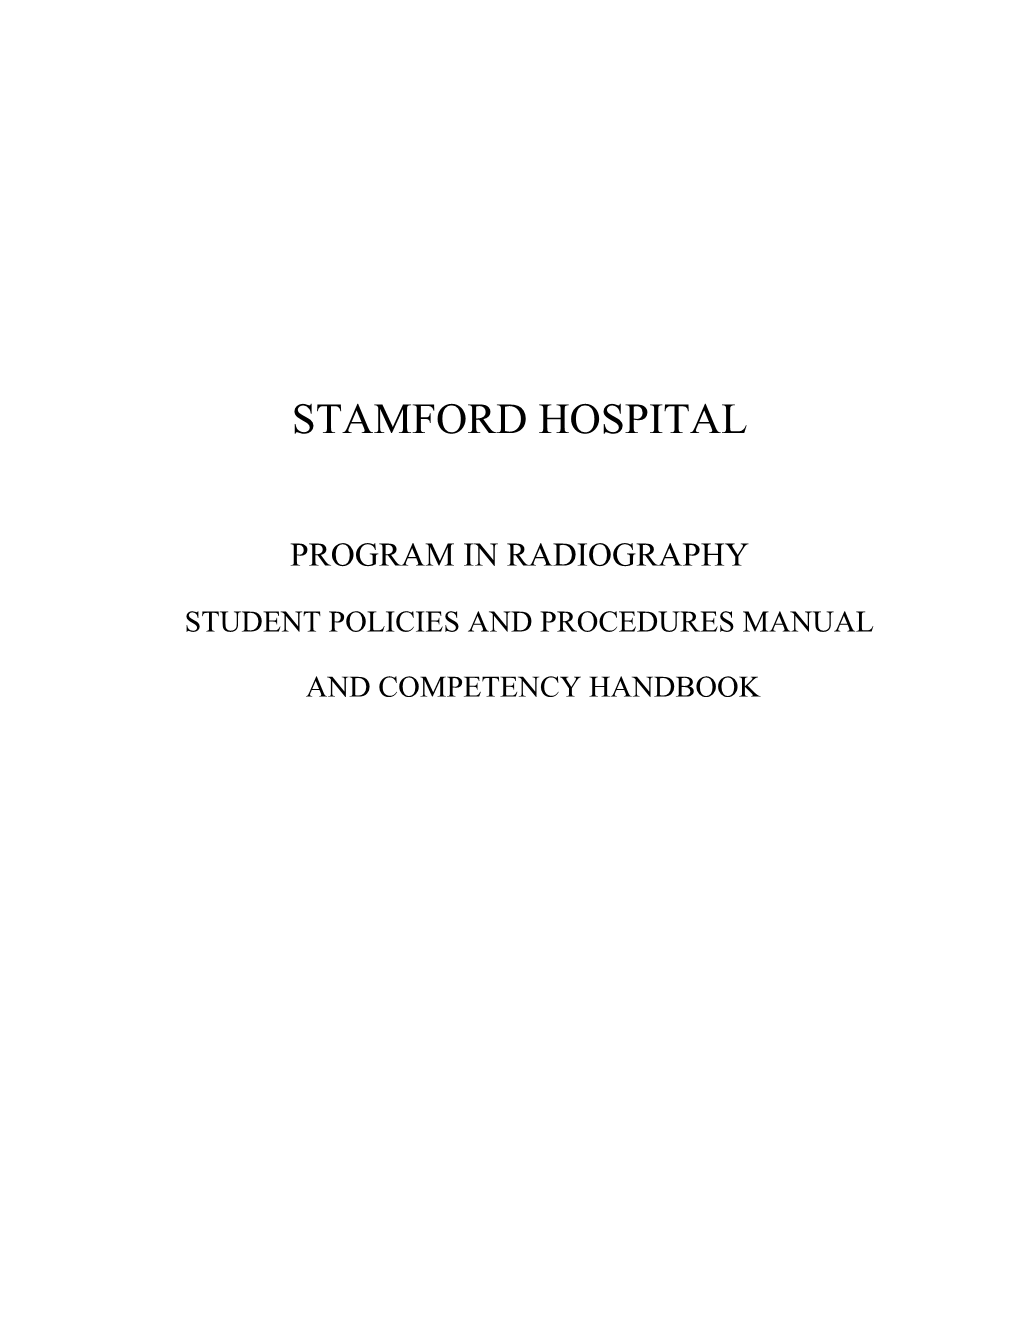 The Stamford Hospital